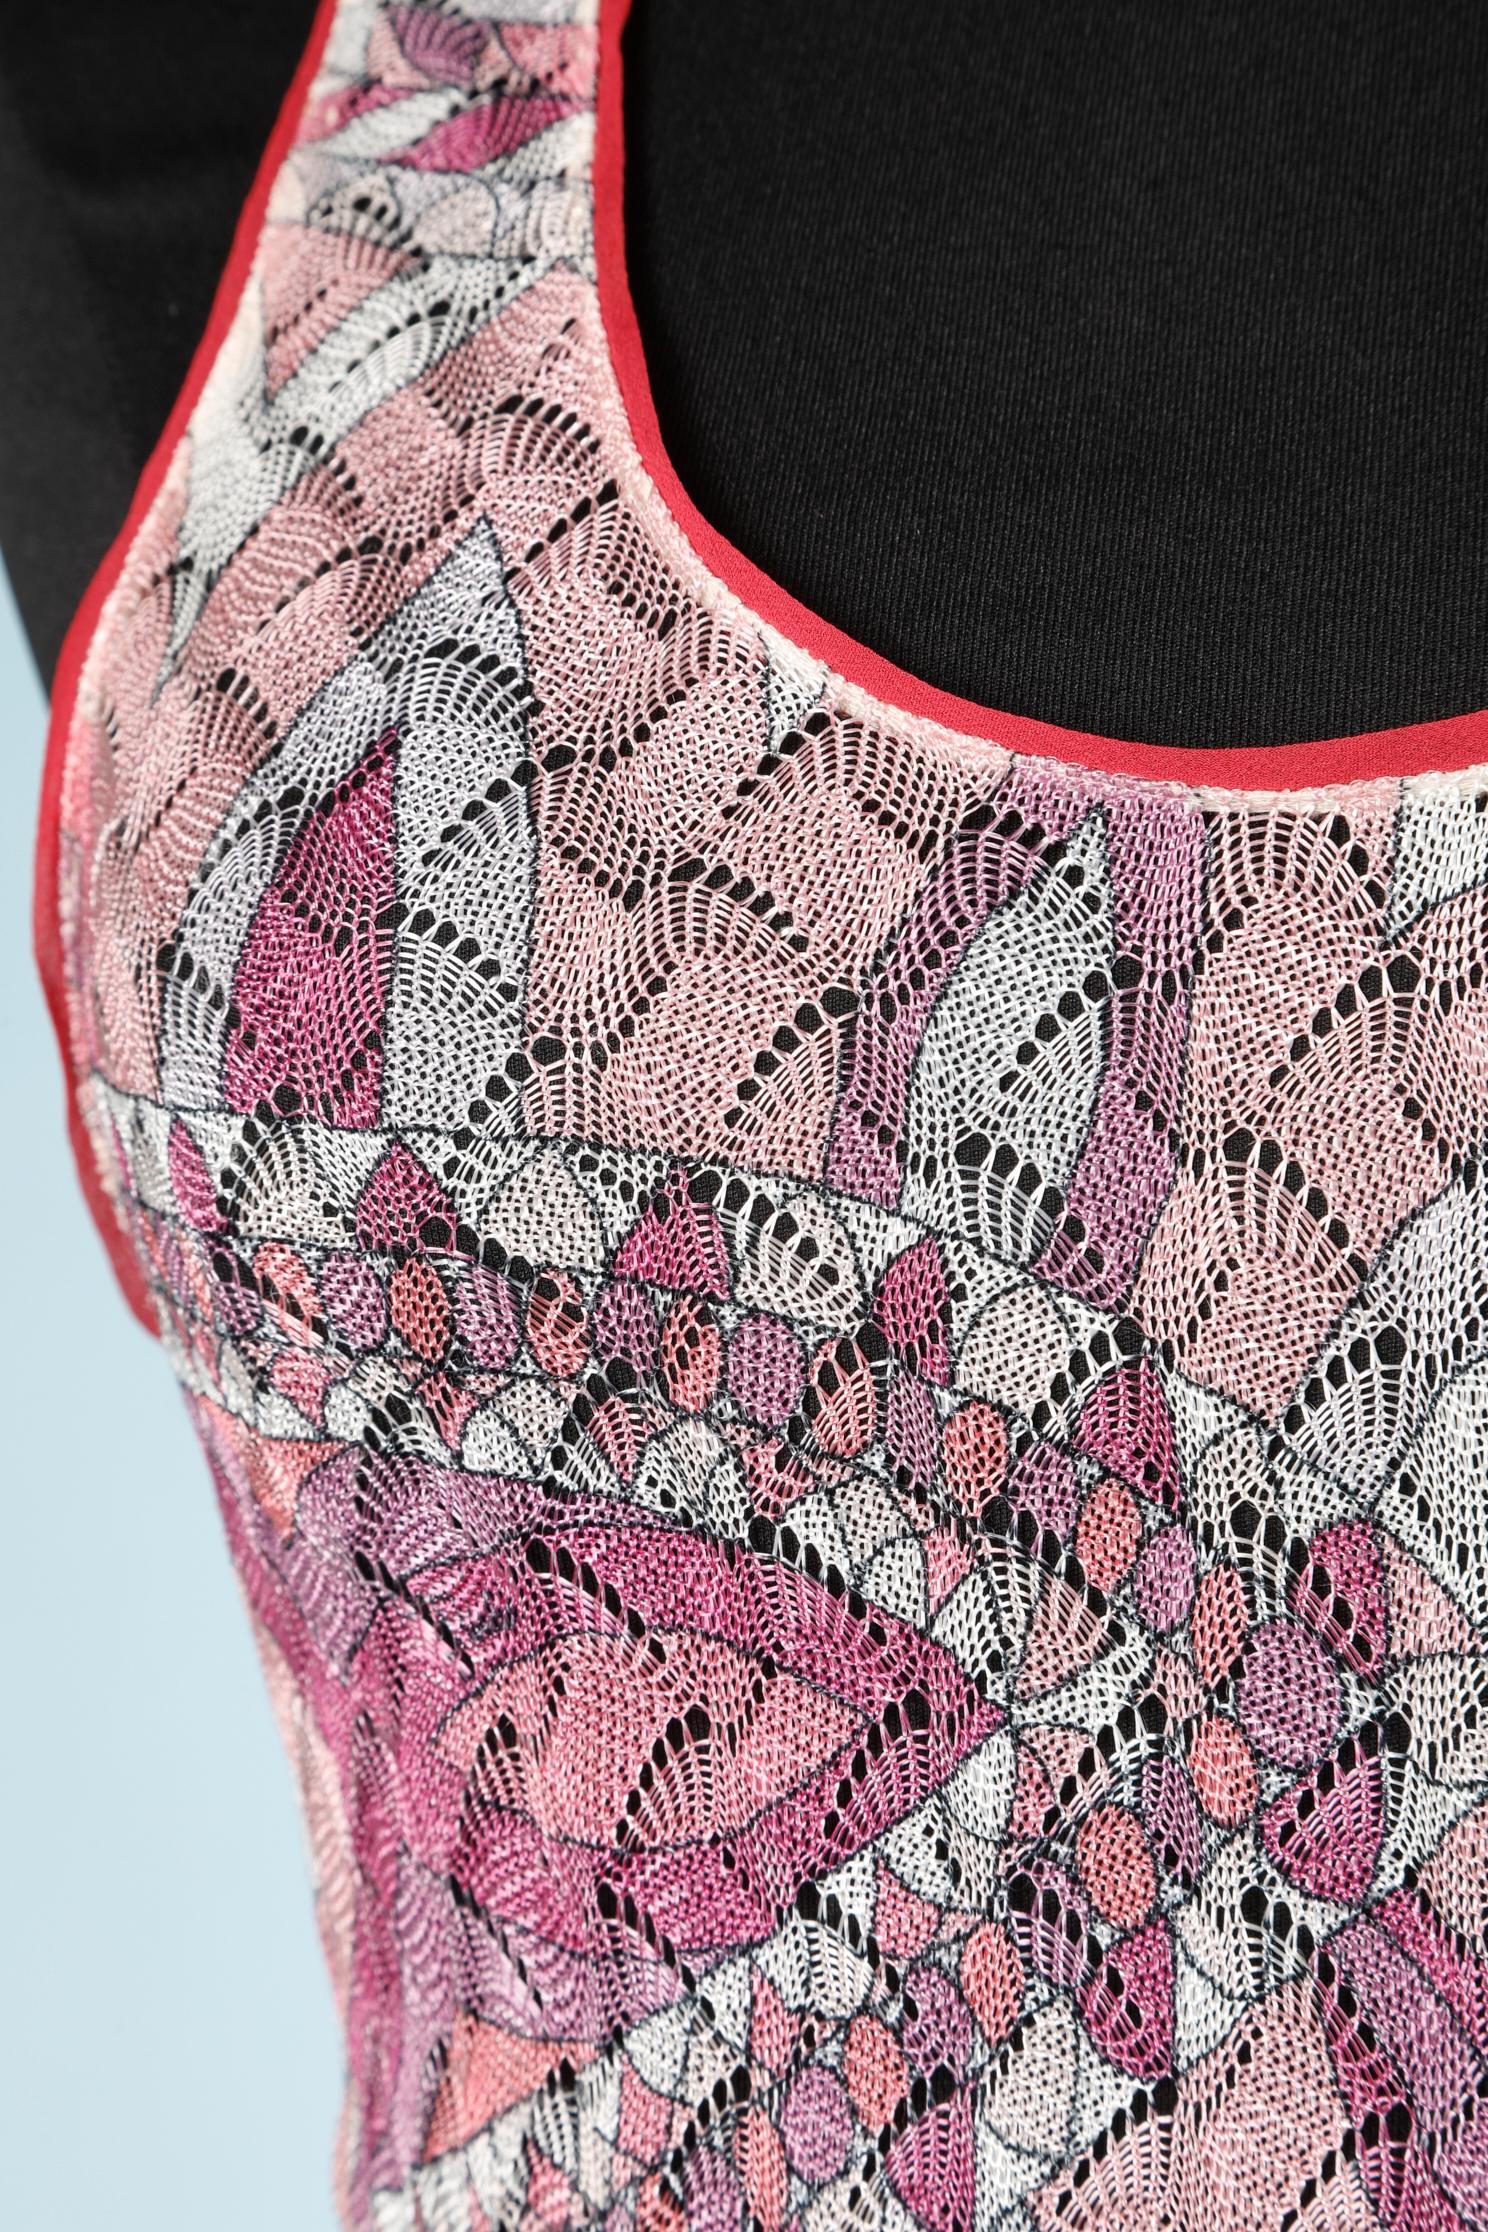 See-trough printed long knit dress.
SIZE 36 